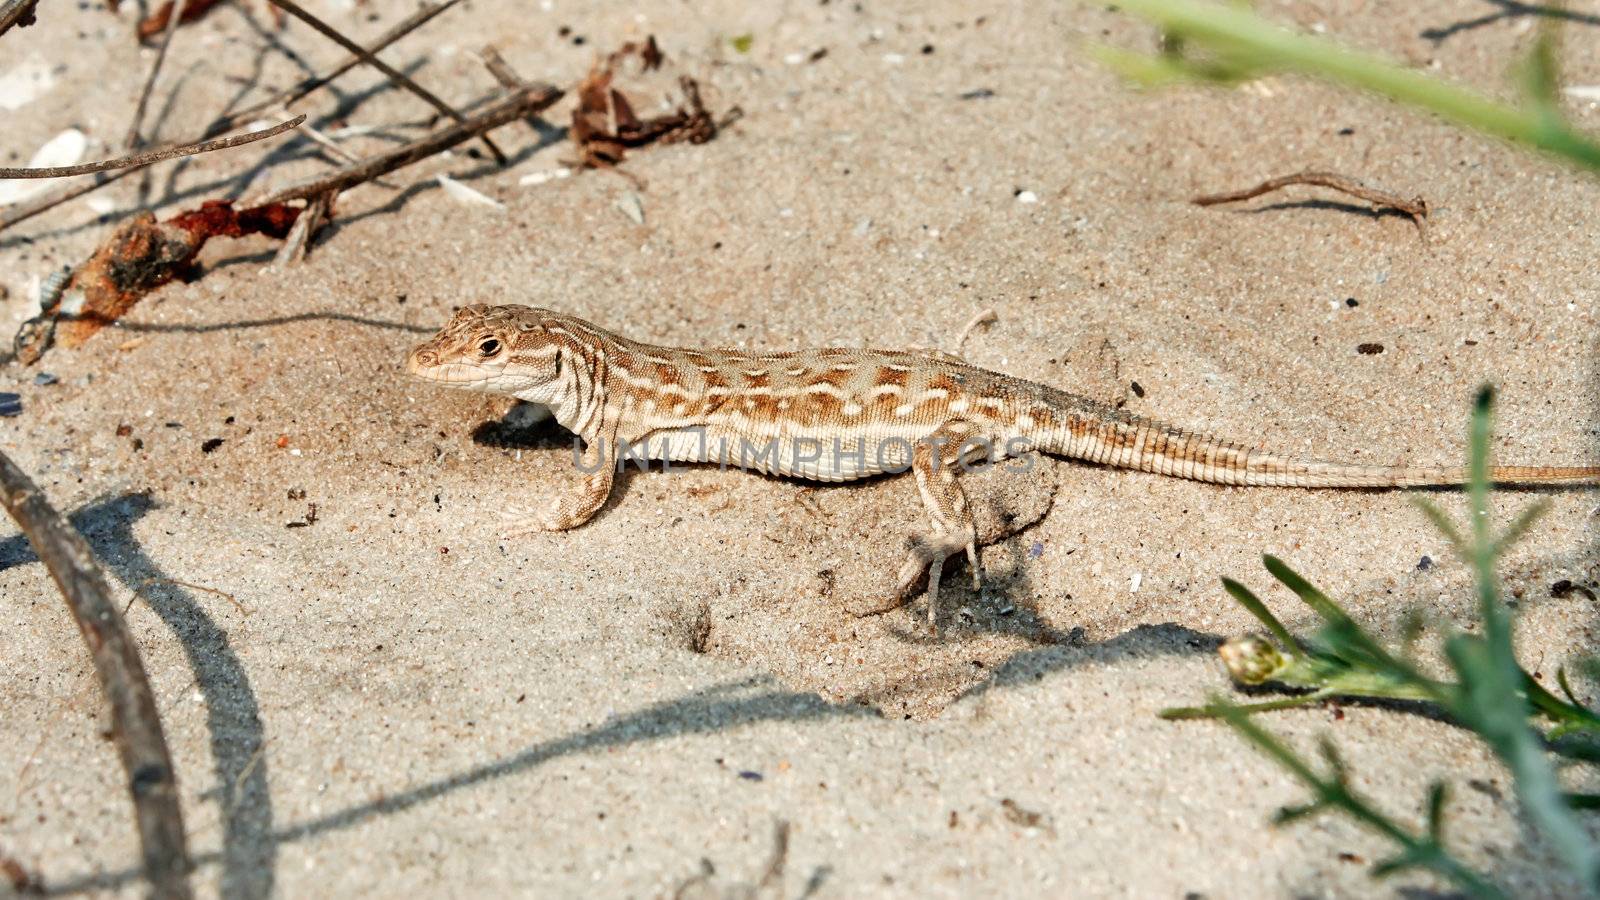 Lizard on the beach sand. Natural environment close up